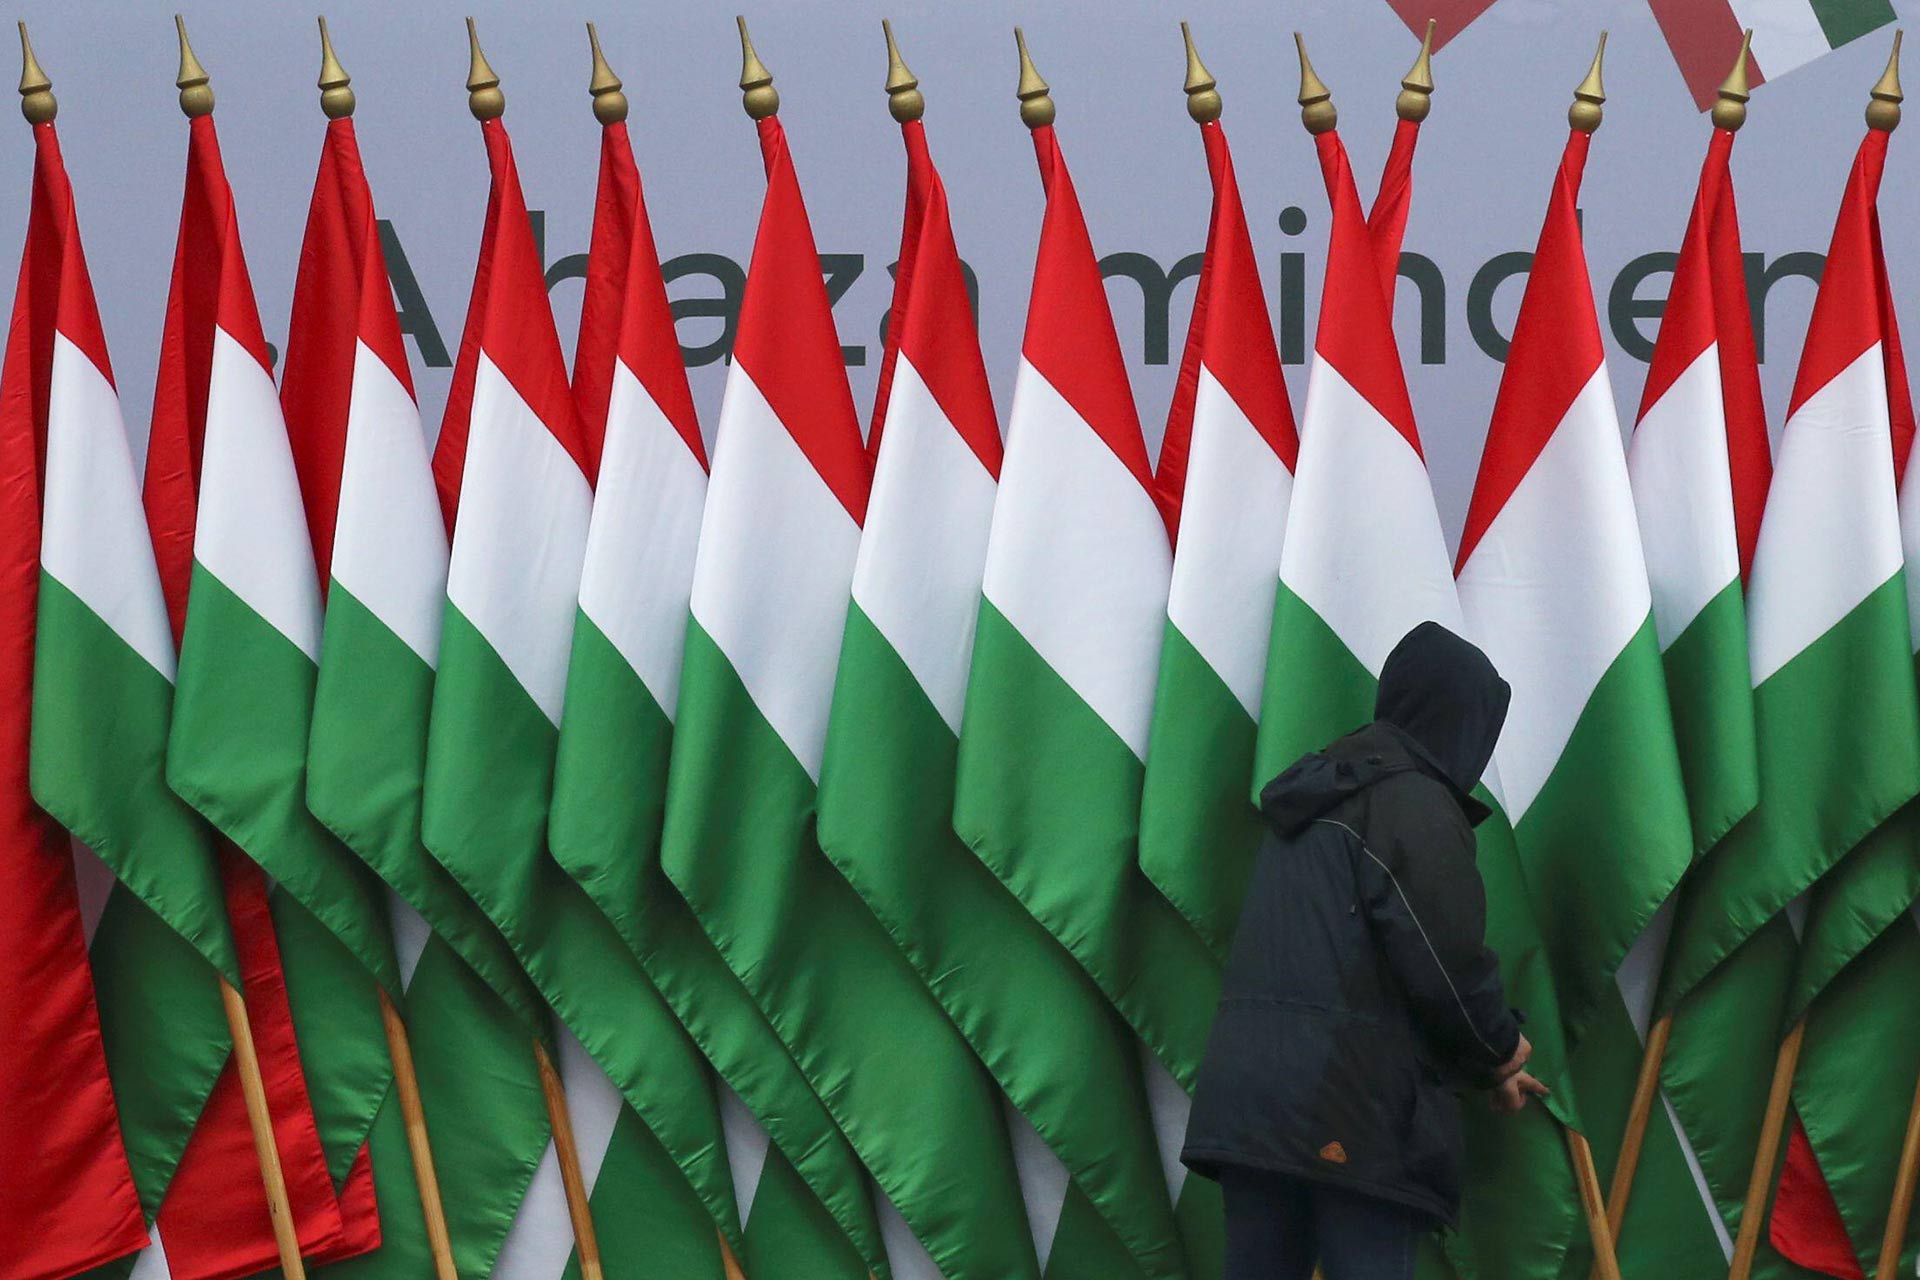 Hungarian flags